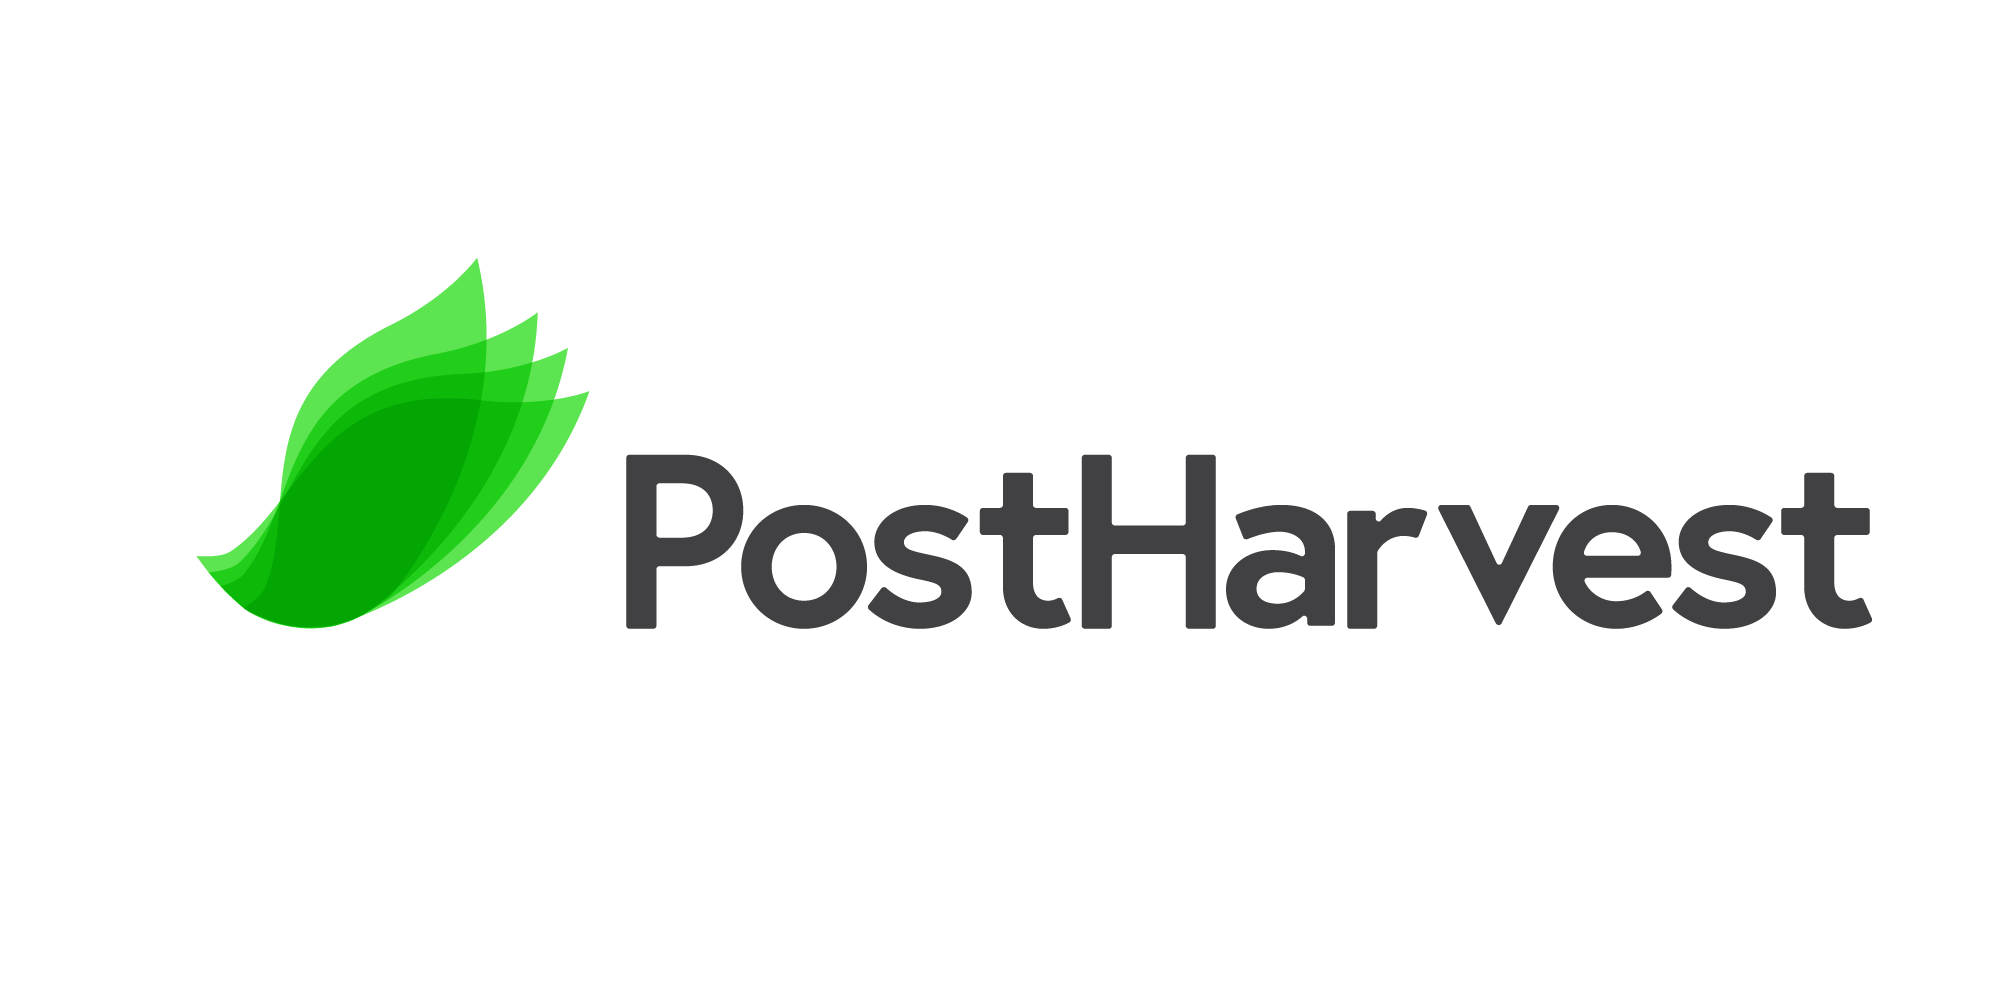 Post Harvest